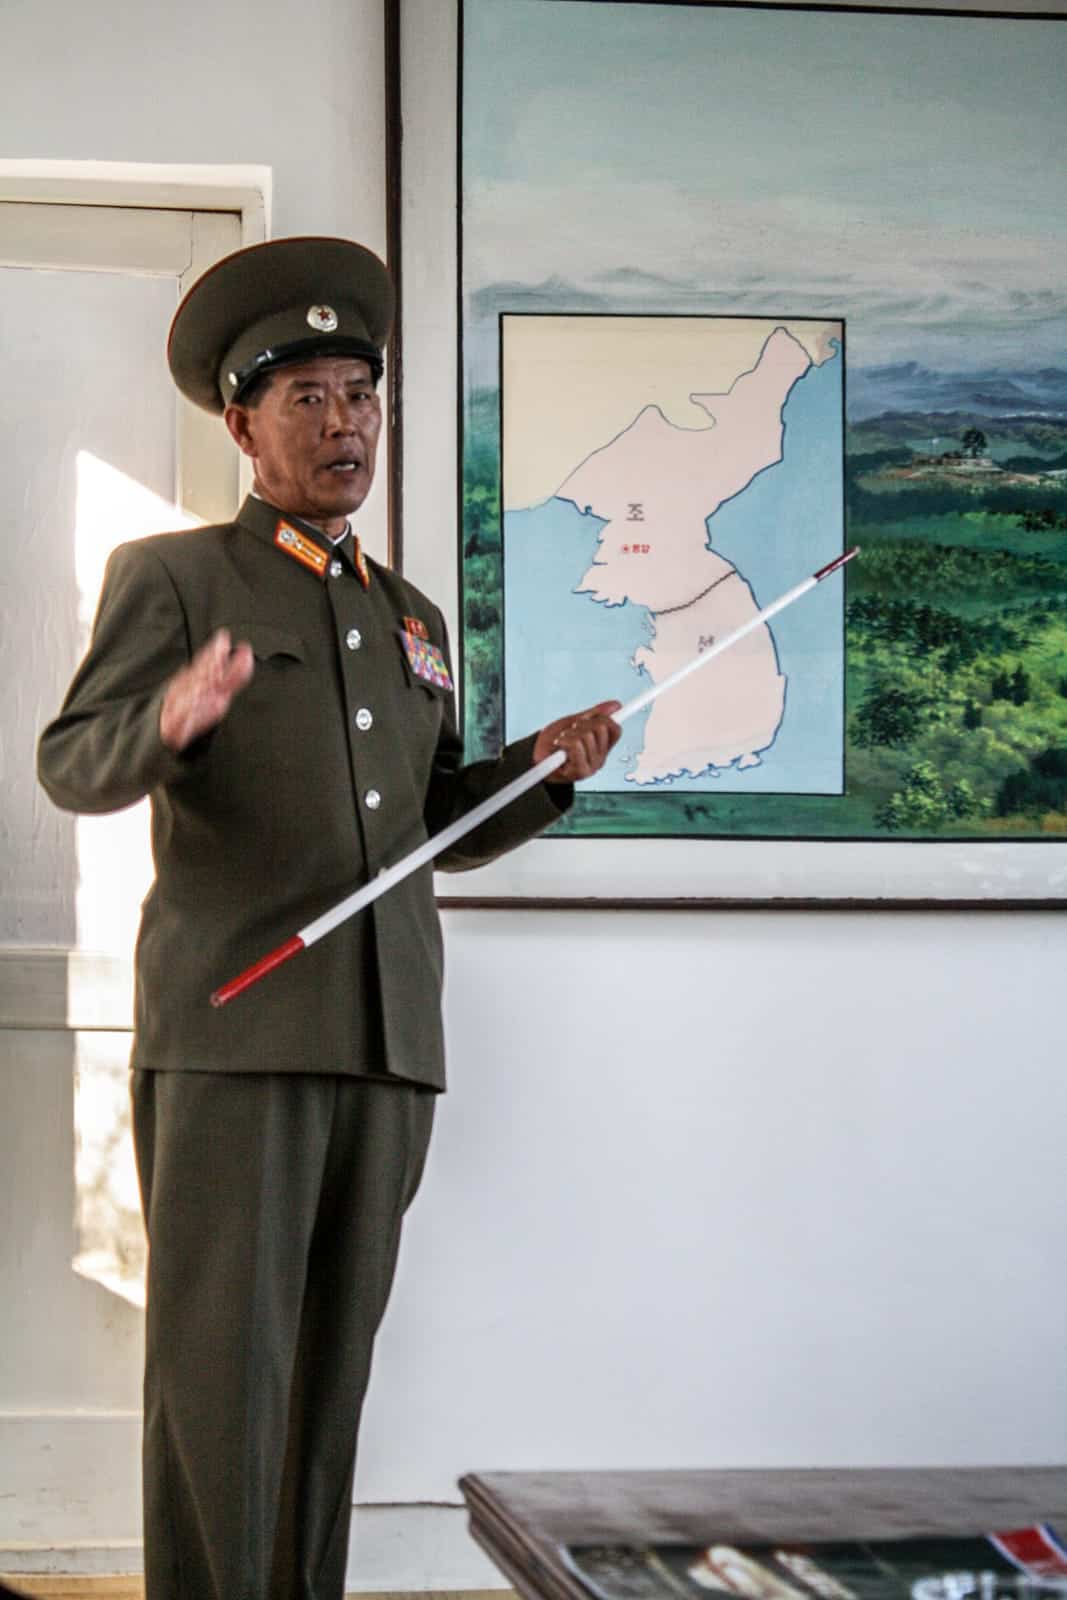 North Korea guard explains history to tourists visiting border to South Korea